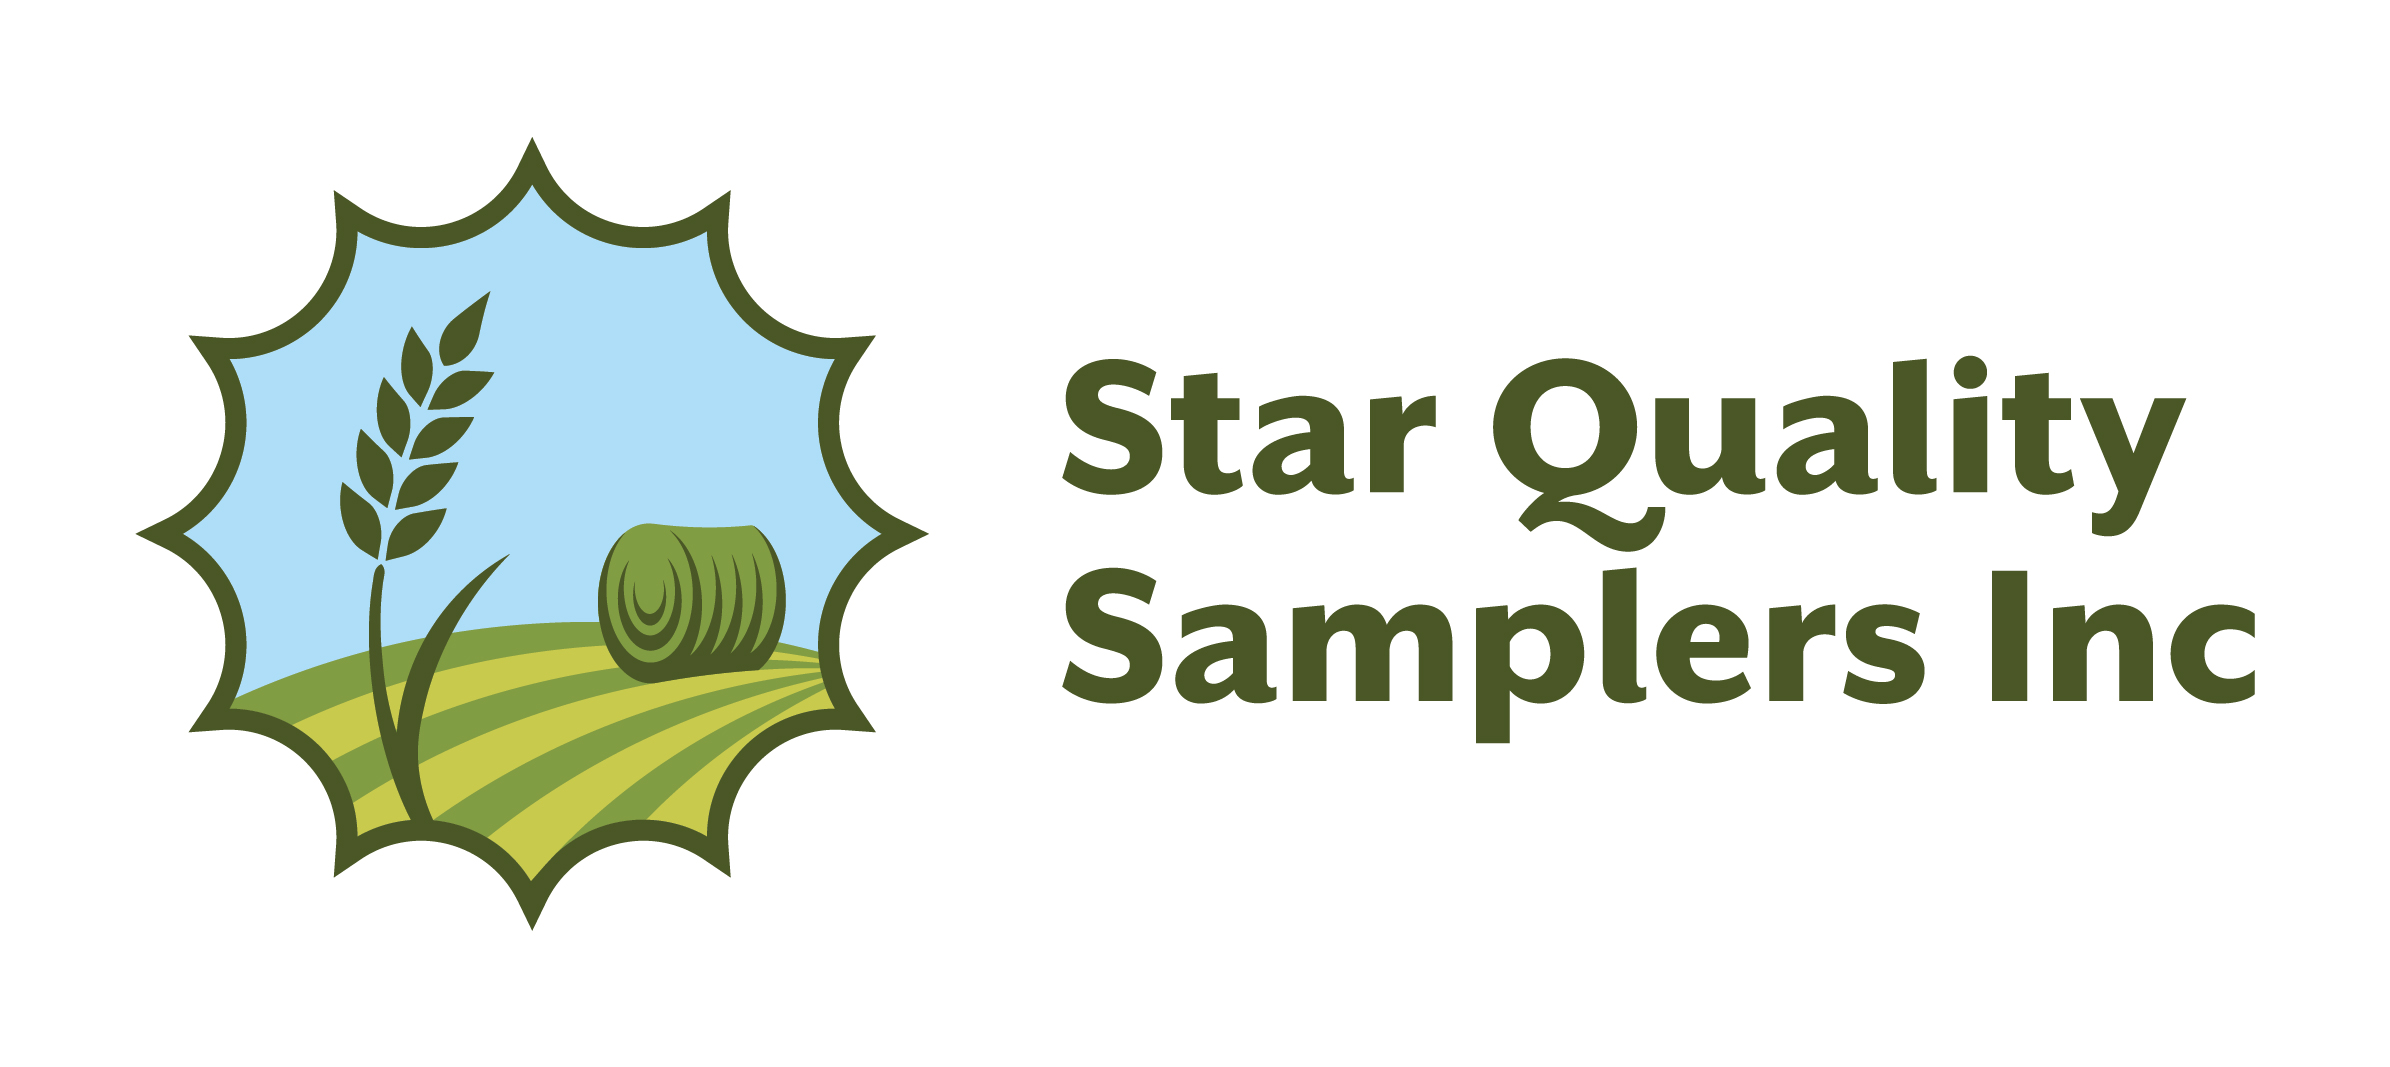 Star Quality Samplers Inc.